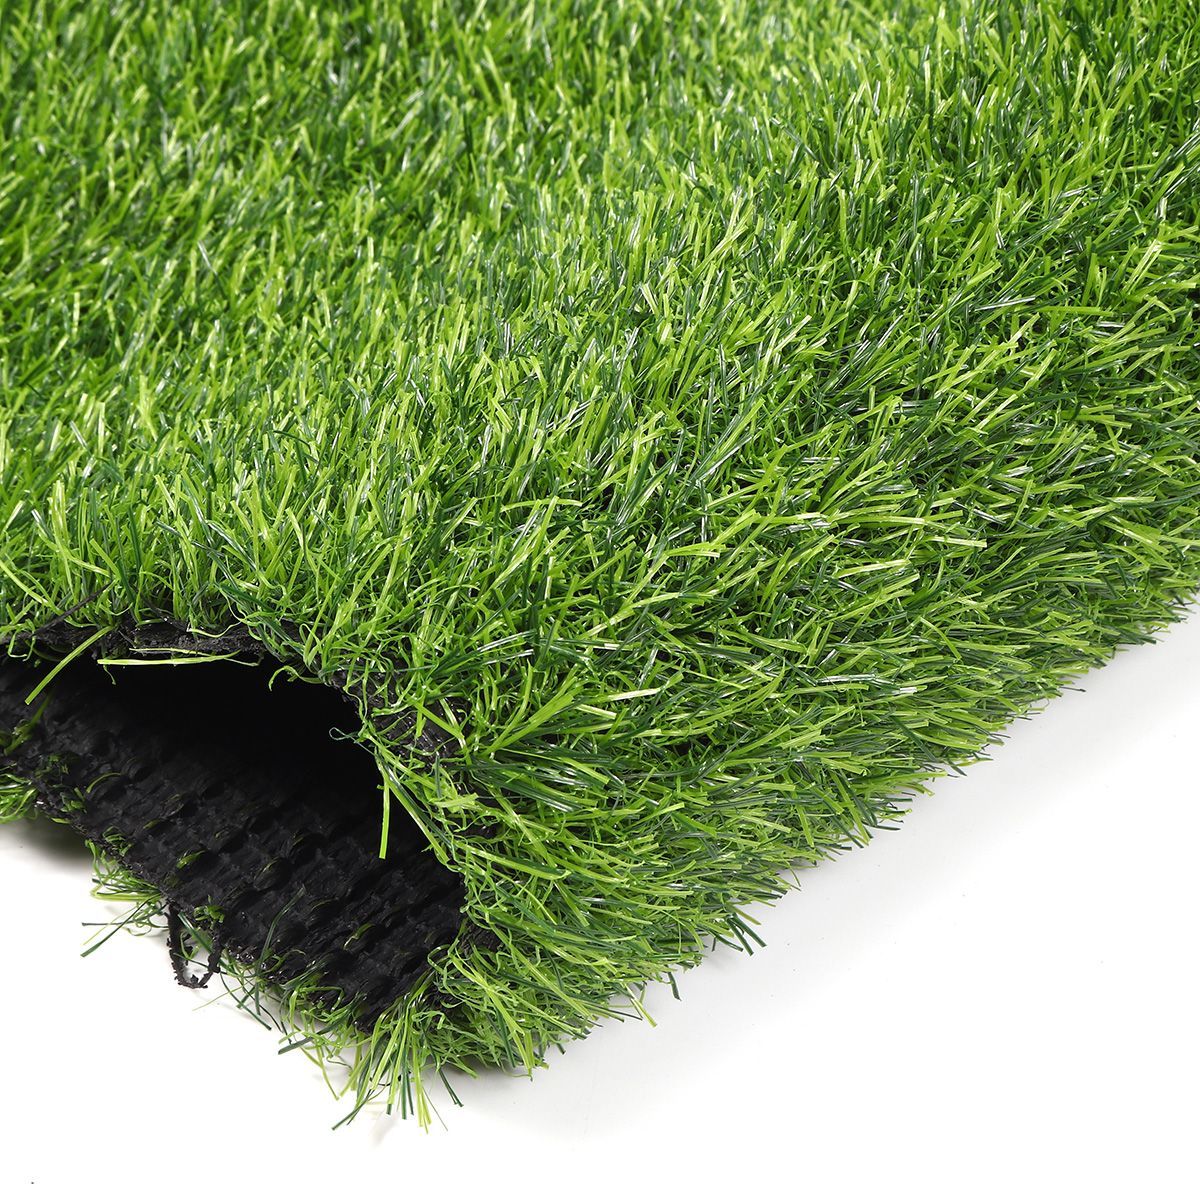 Artificial-Synthetic-Lawn-Turf-Plastic-Green-Plant-Grass-Garden-Decor-1694876